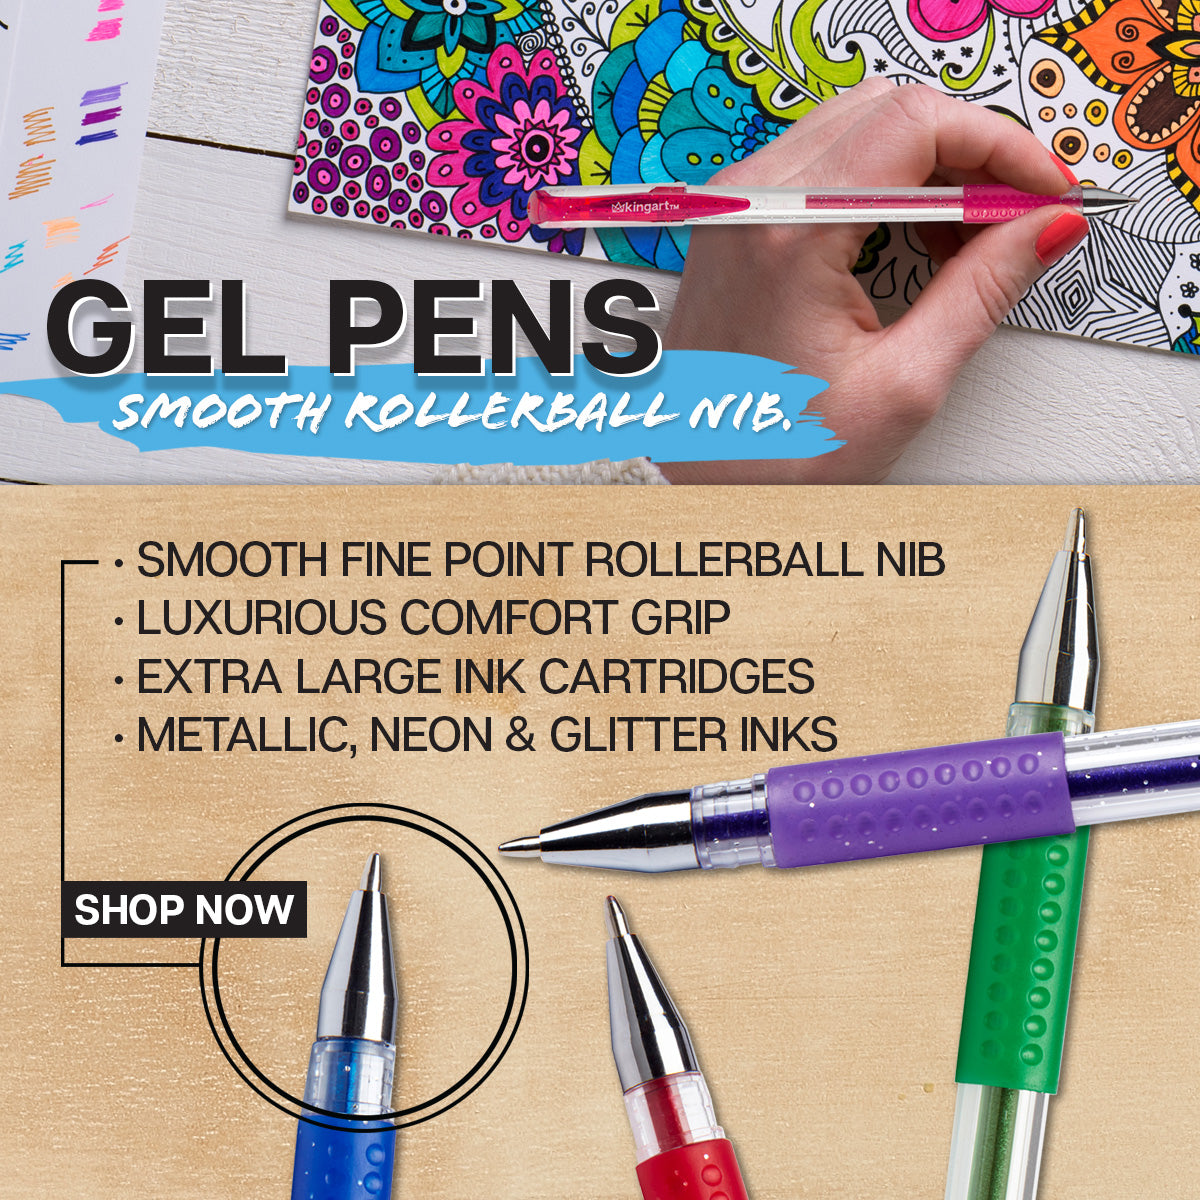 KINGART® Soft Grip Glitter Gel Pens, 2.0mm Ink Cartridge, Set of